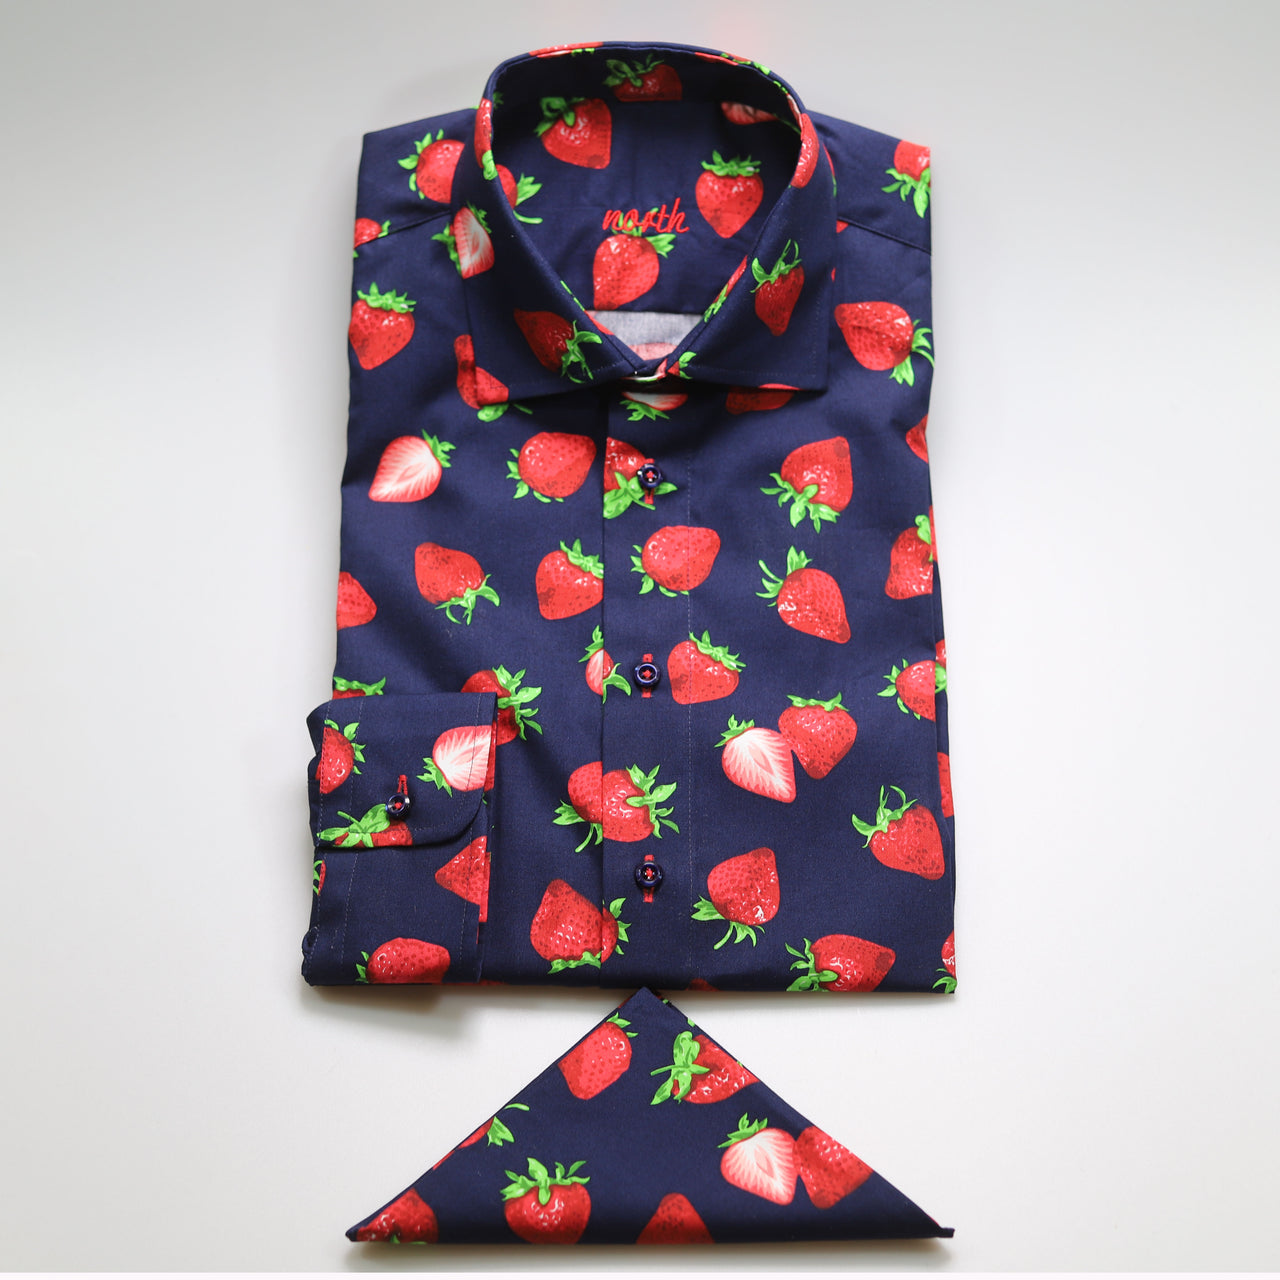 The Strawberry Fields Shirt